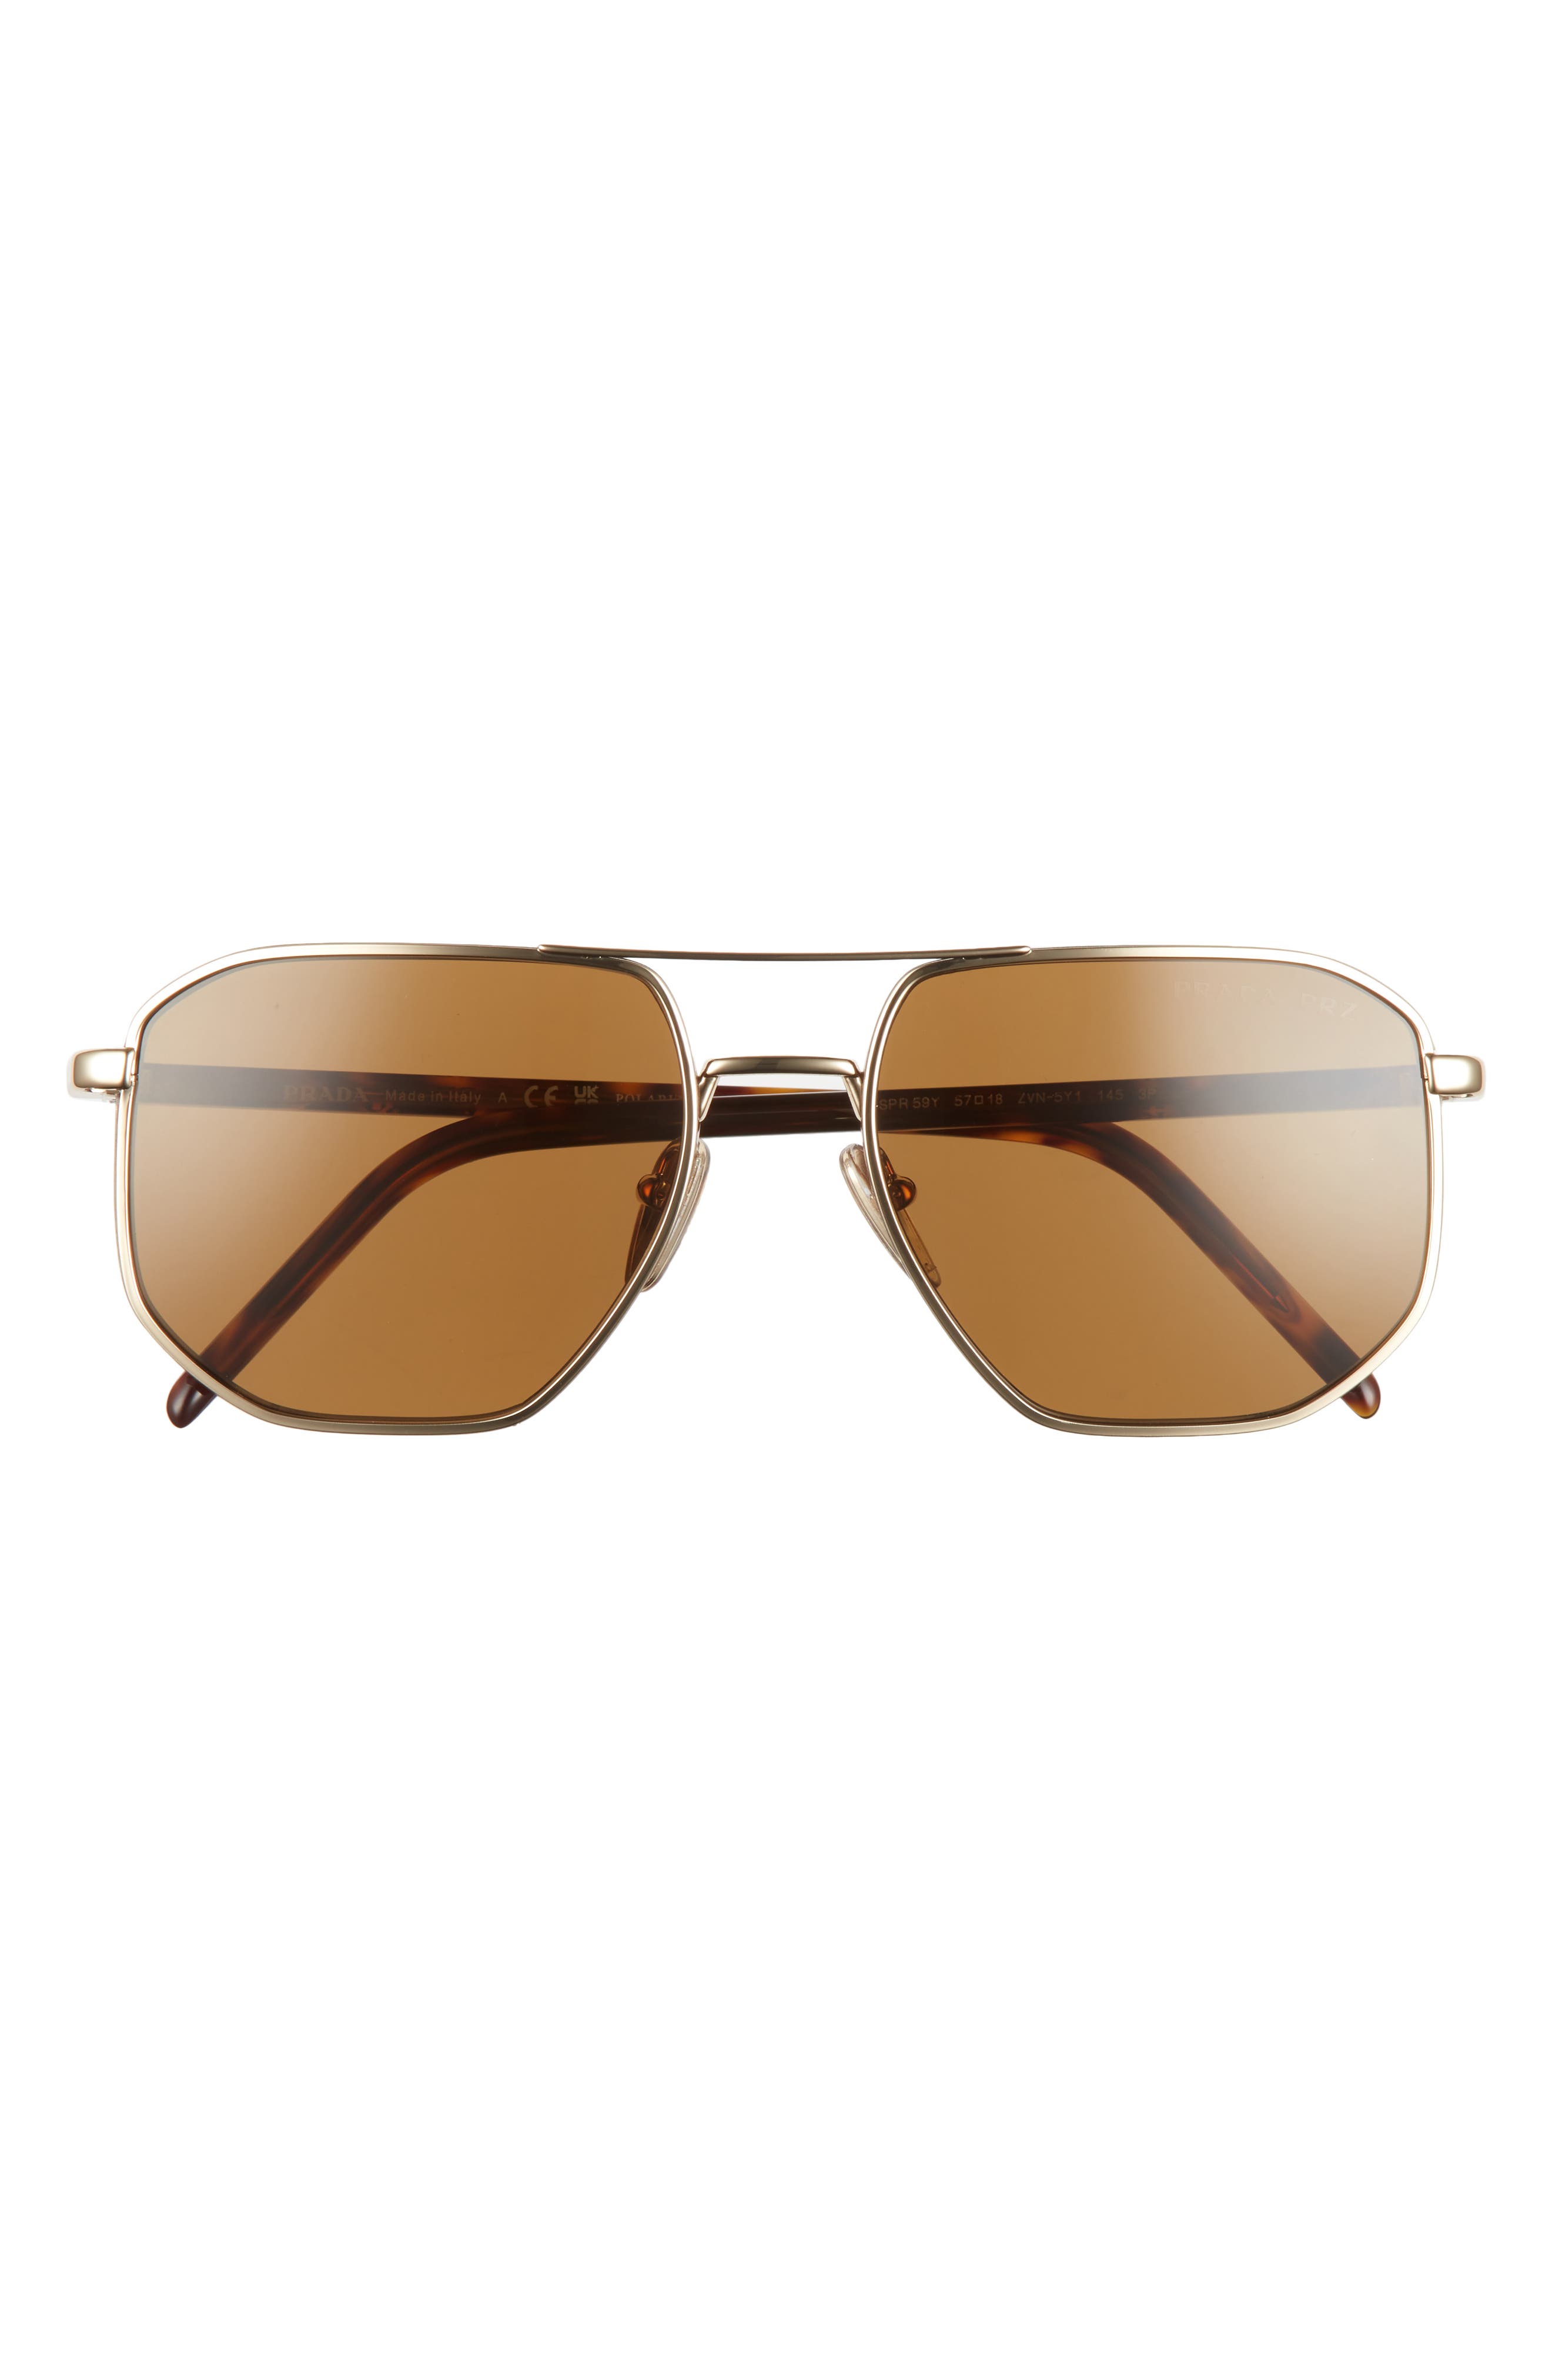 Prada 57mm Polarized Square Sunglasses in Pale Gold